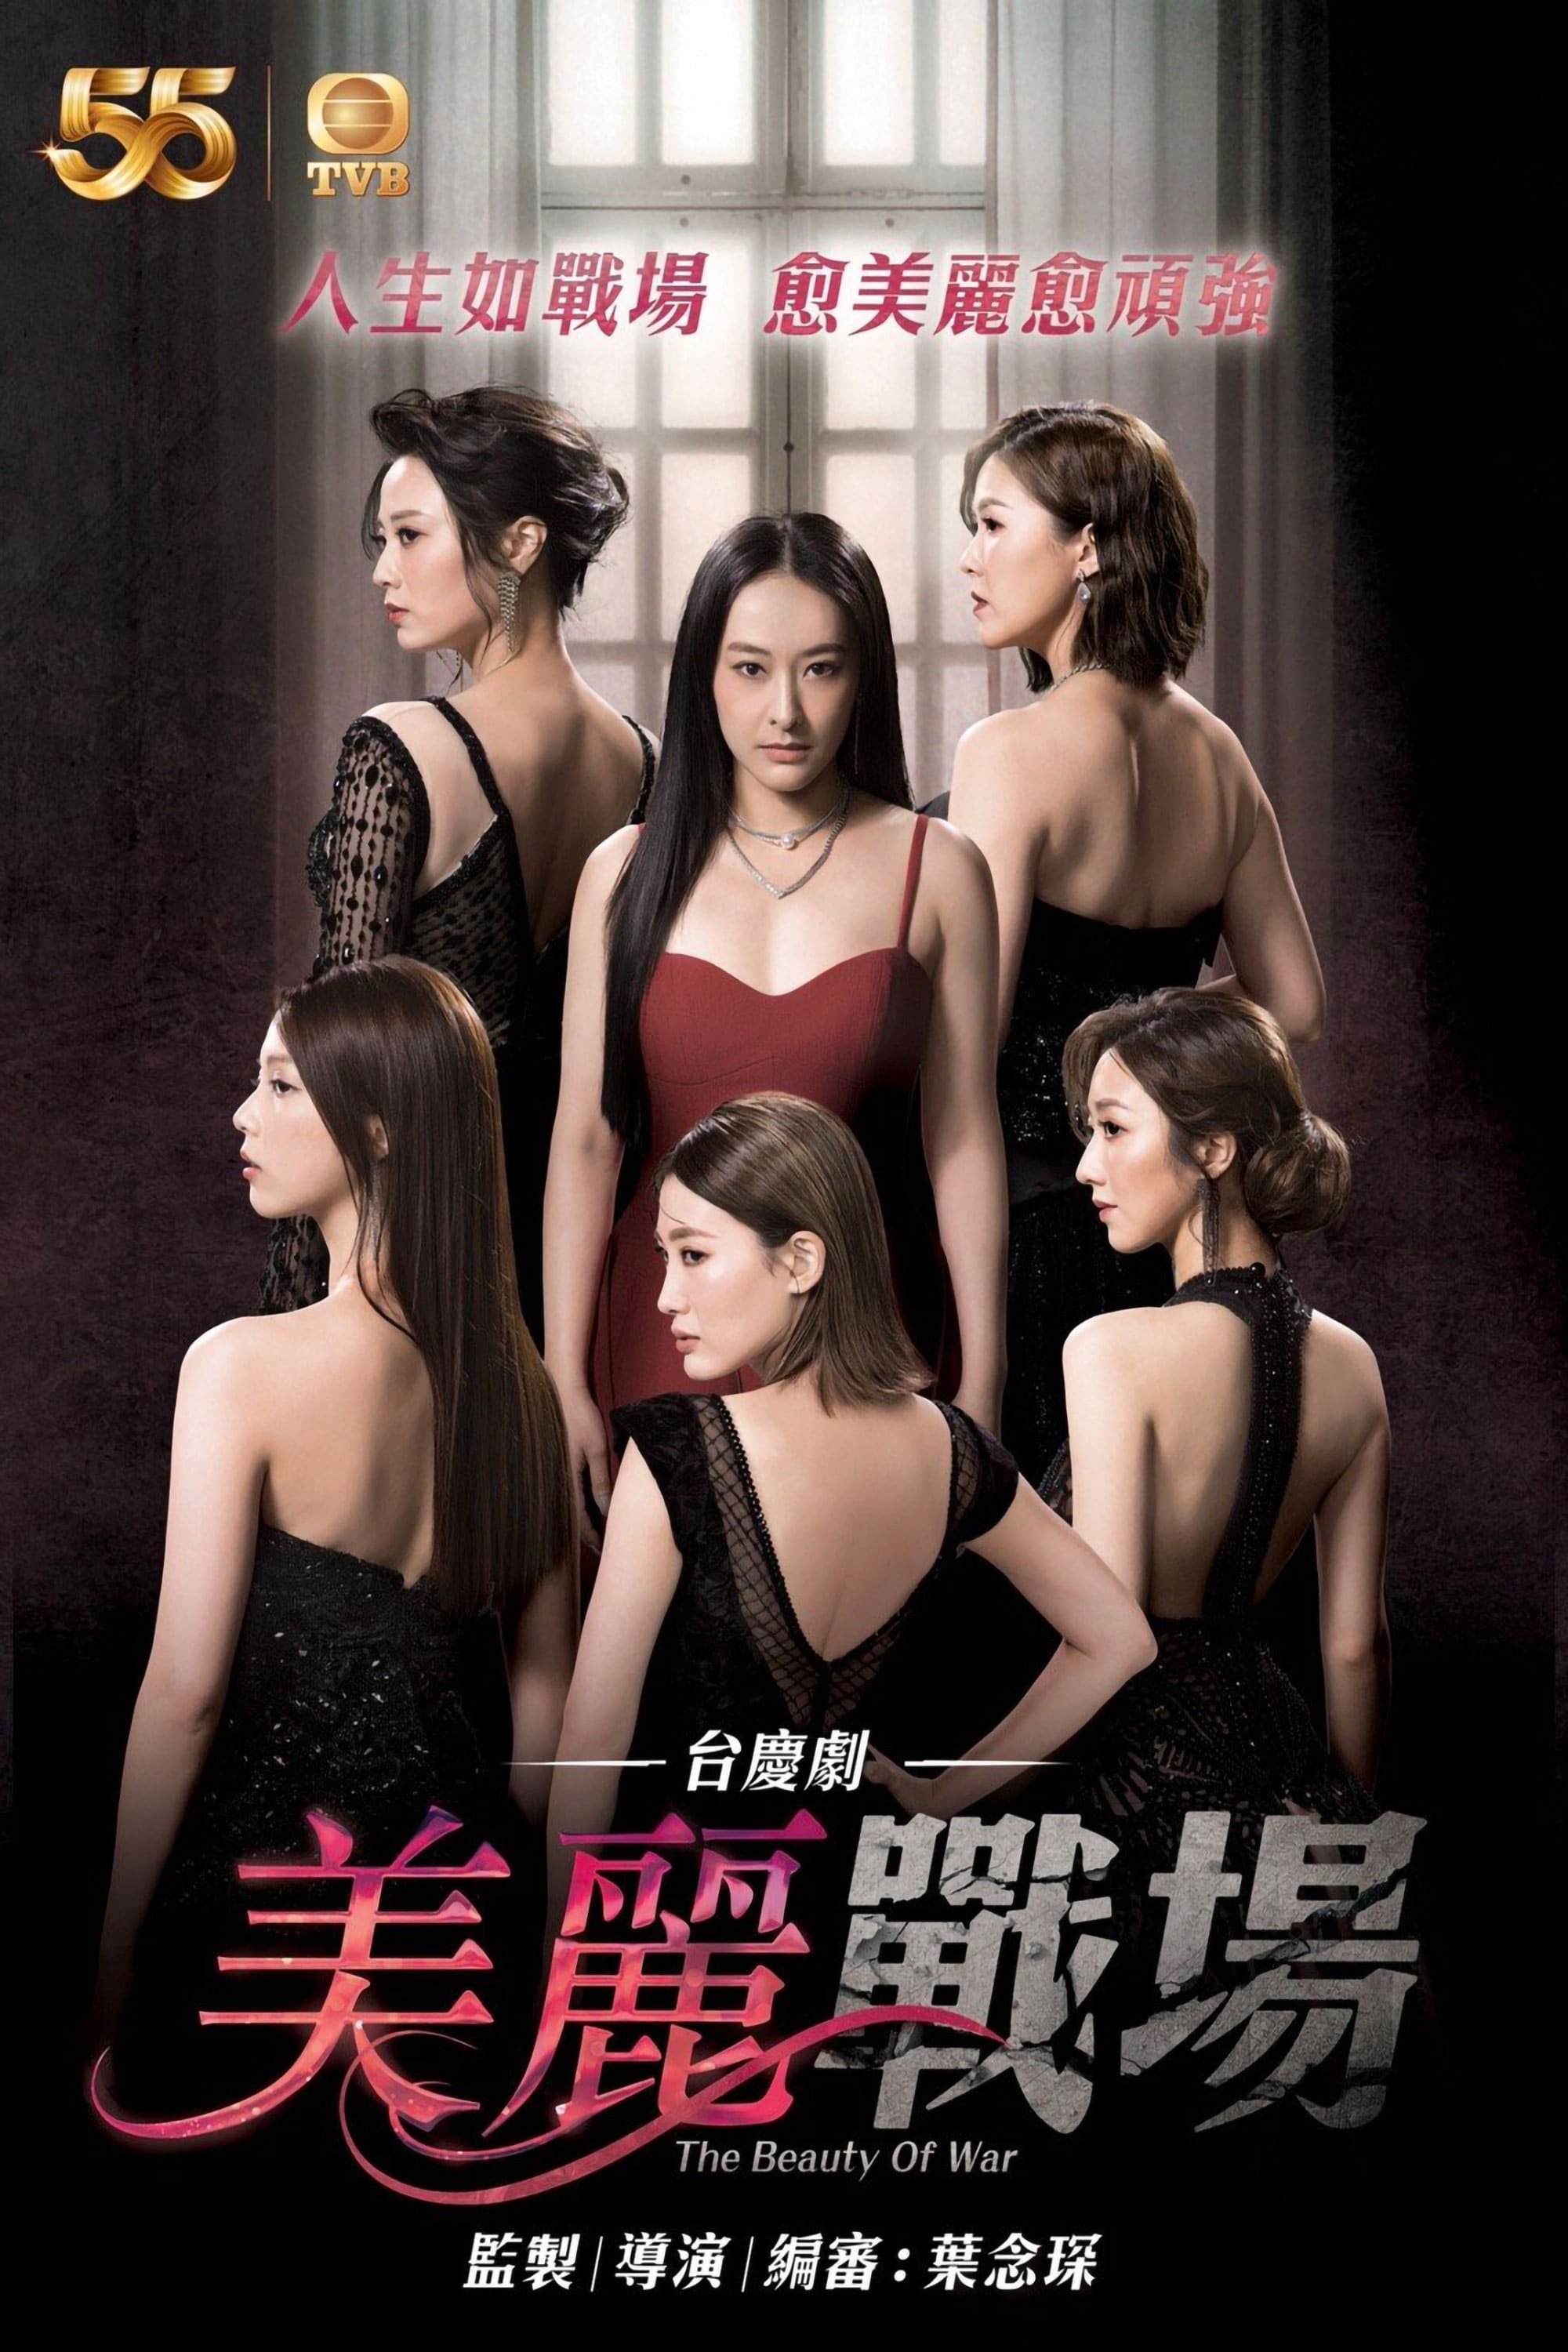 TV ratings for The War Of Beauties (美麗戰場) in Australia. TVB Jade TV series